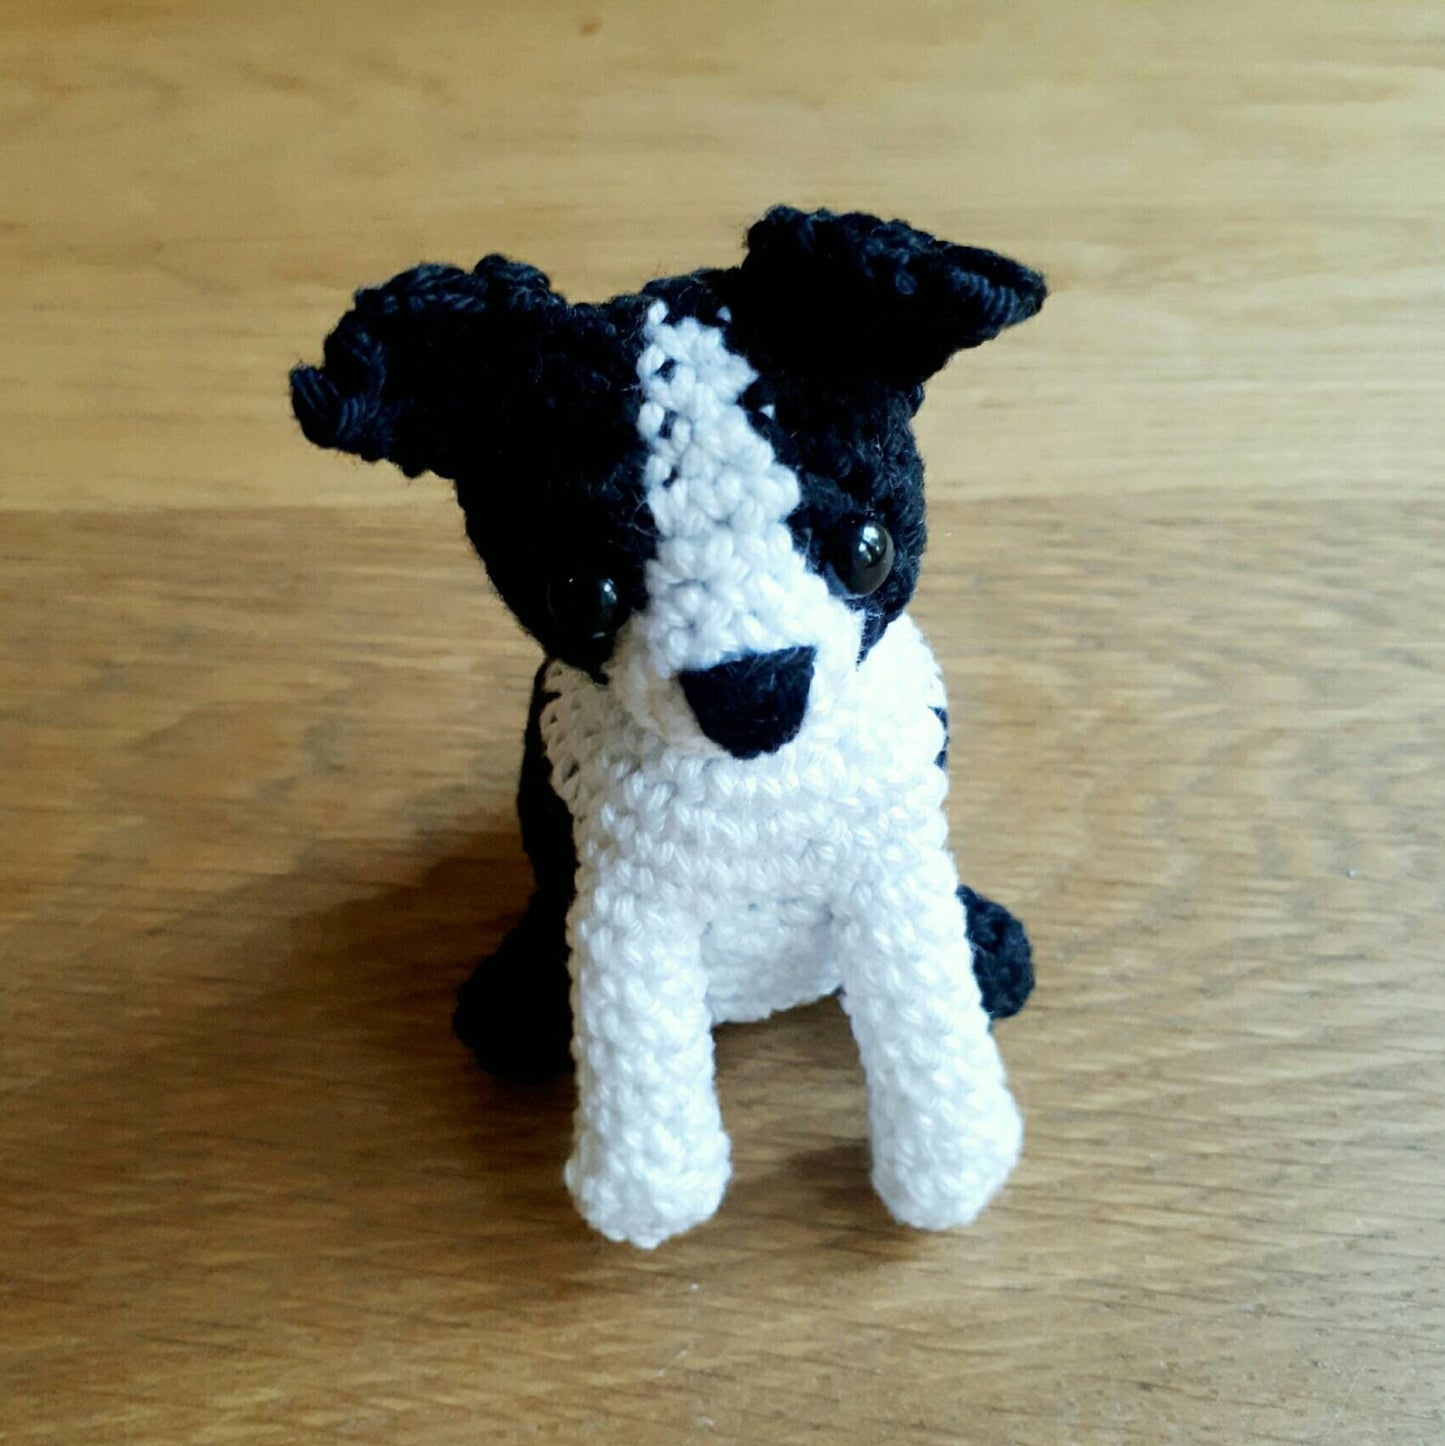 Boston Terrier stuffed animal plush toy